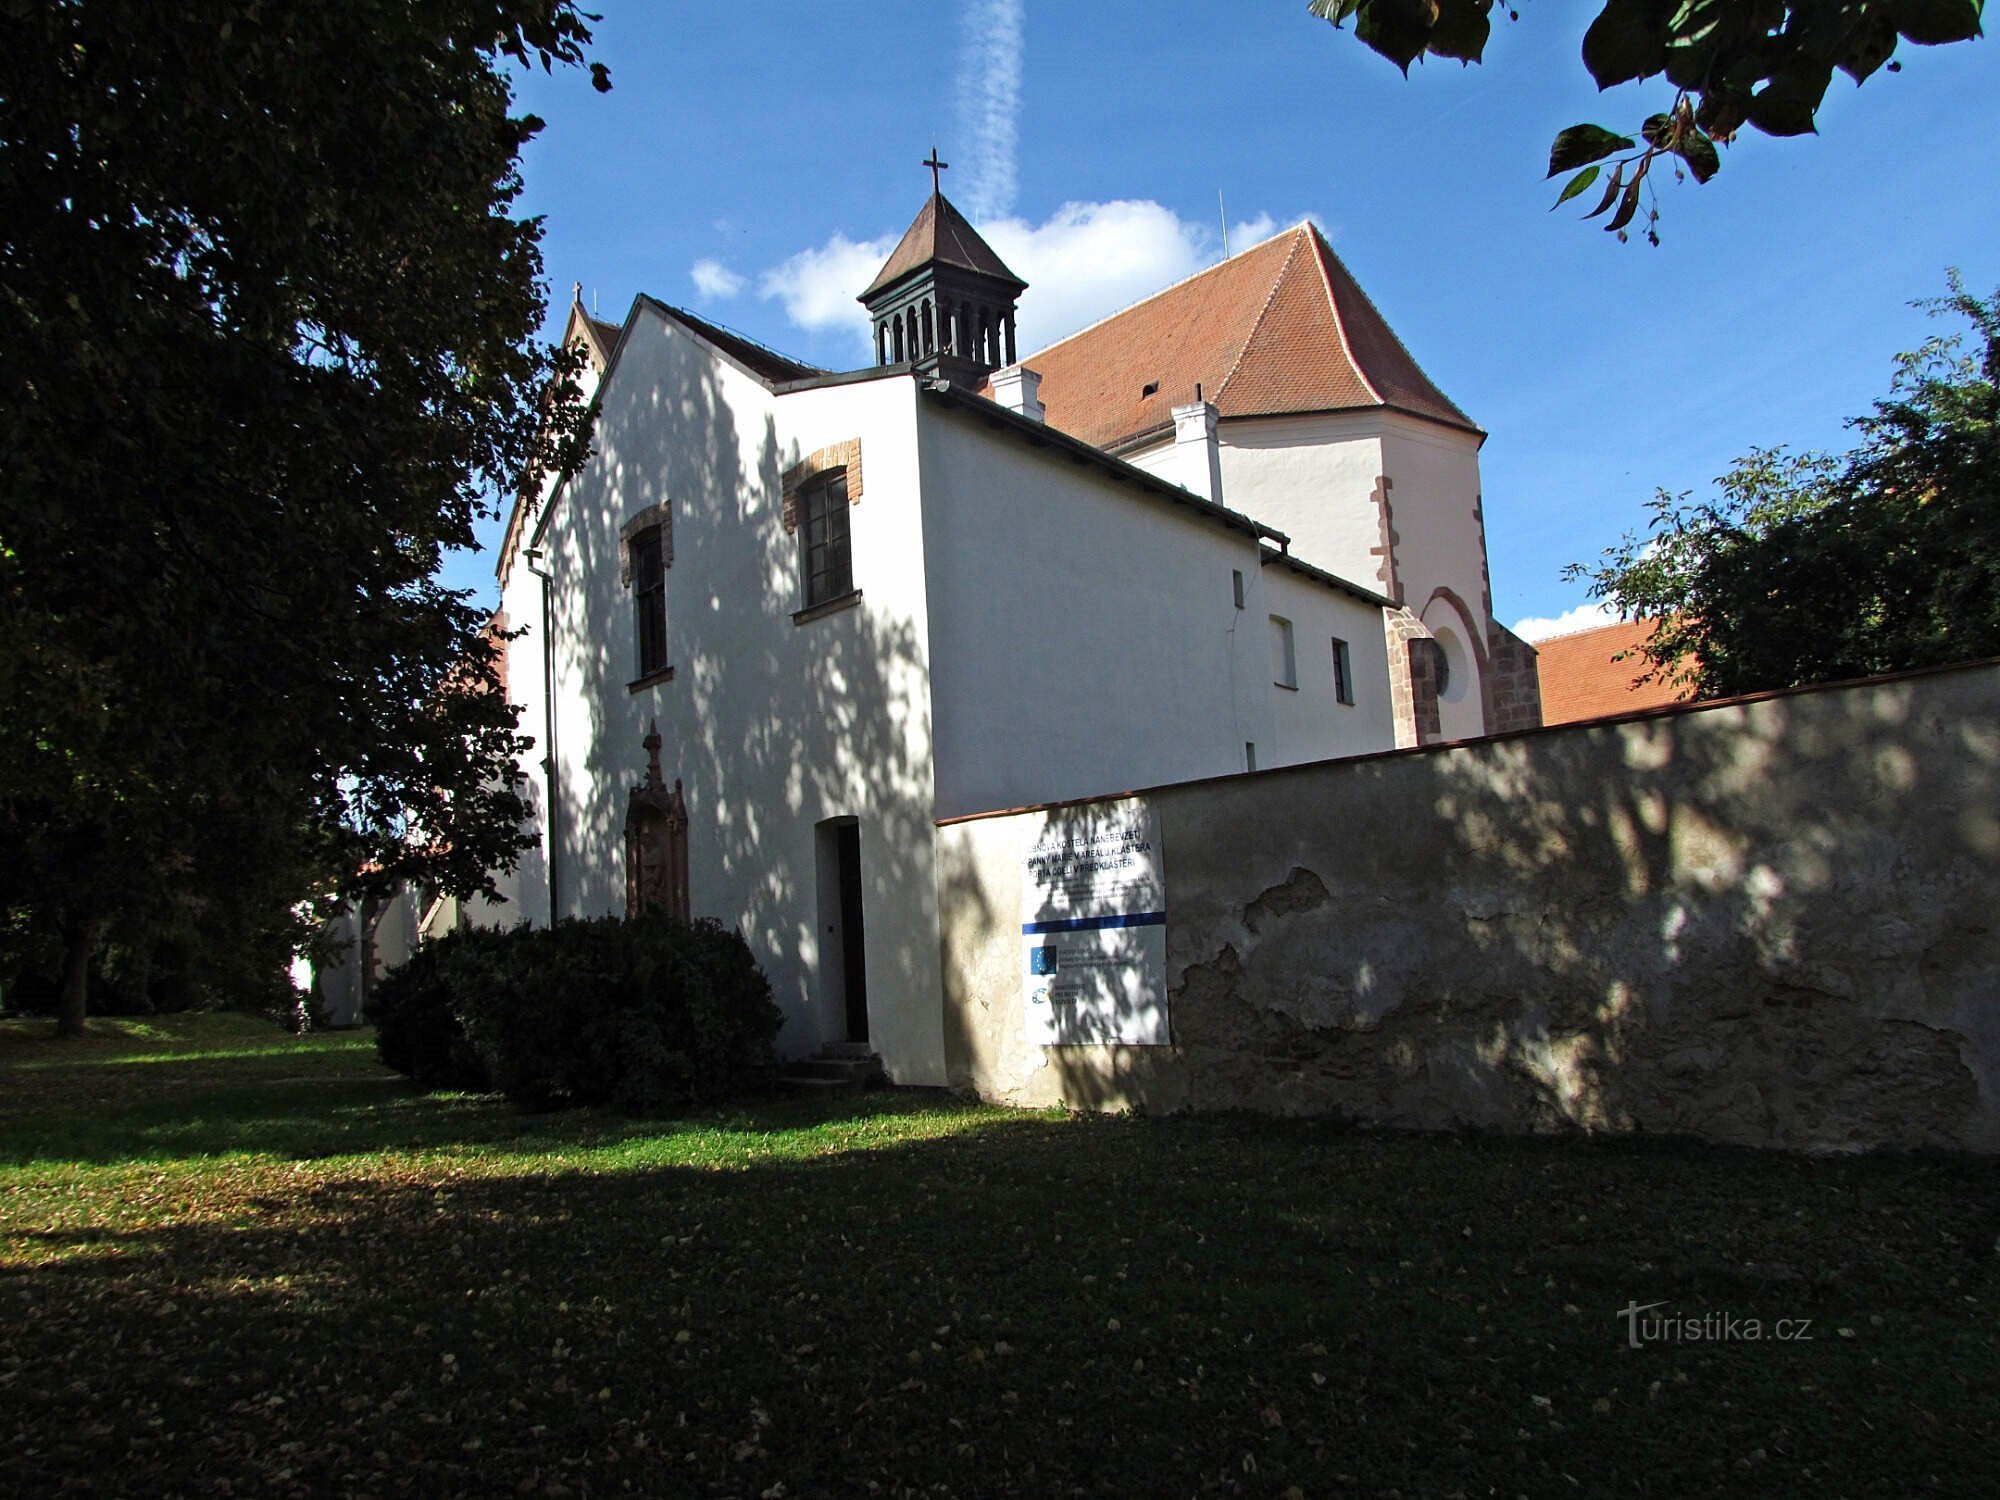 grounds of the Porta Coeli monastery